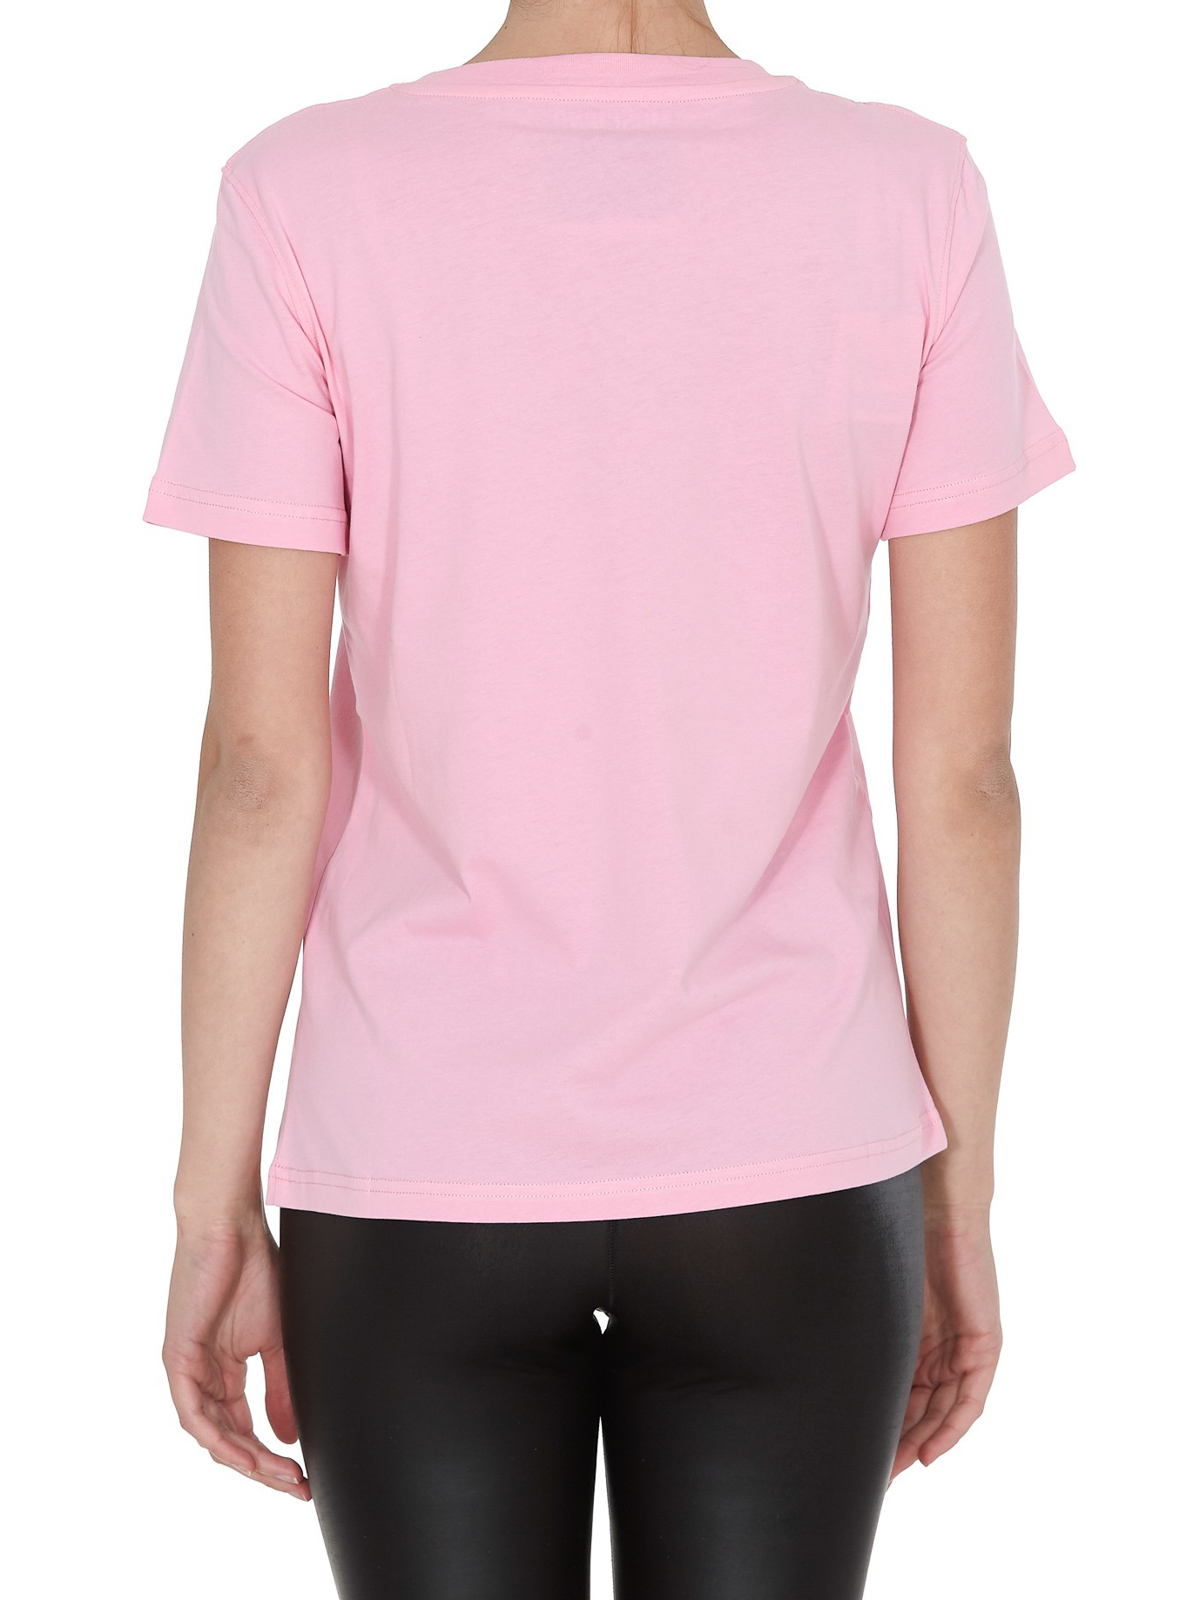 Moschino - T-Shirt - Rosa - T-shirts - 071055401222 | iKRIX Shop online